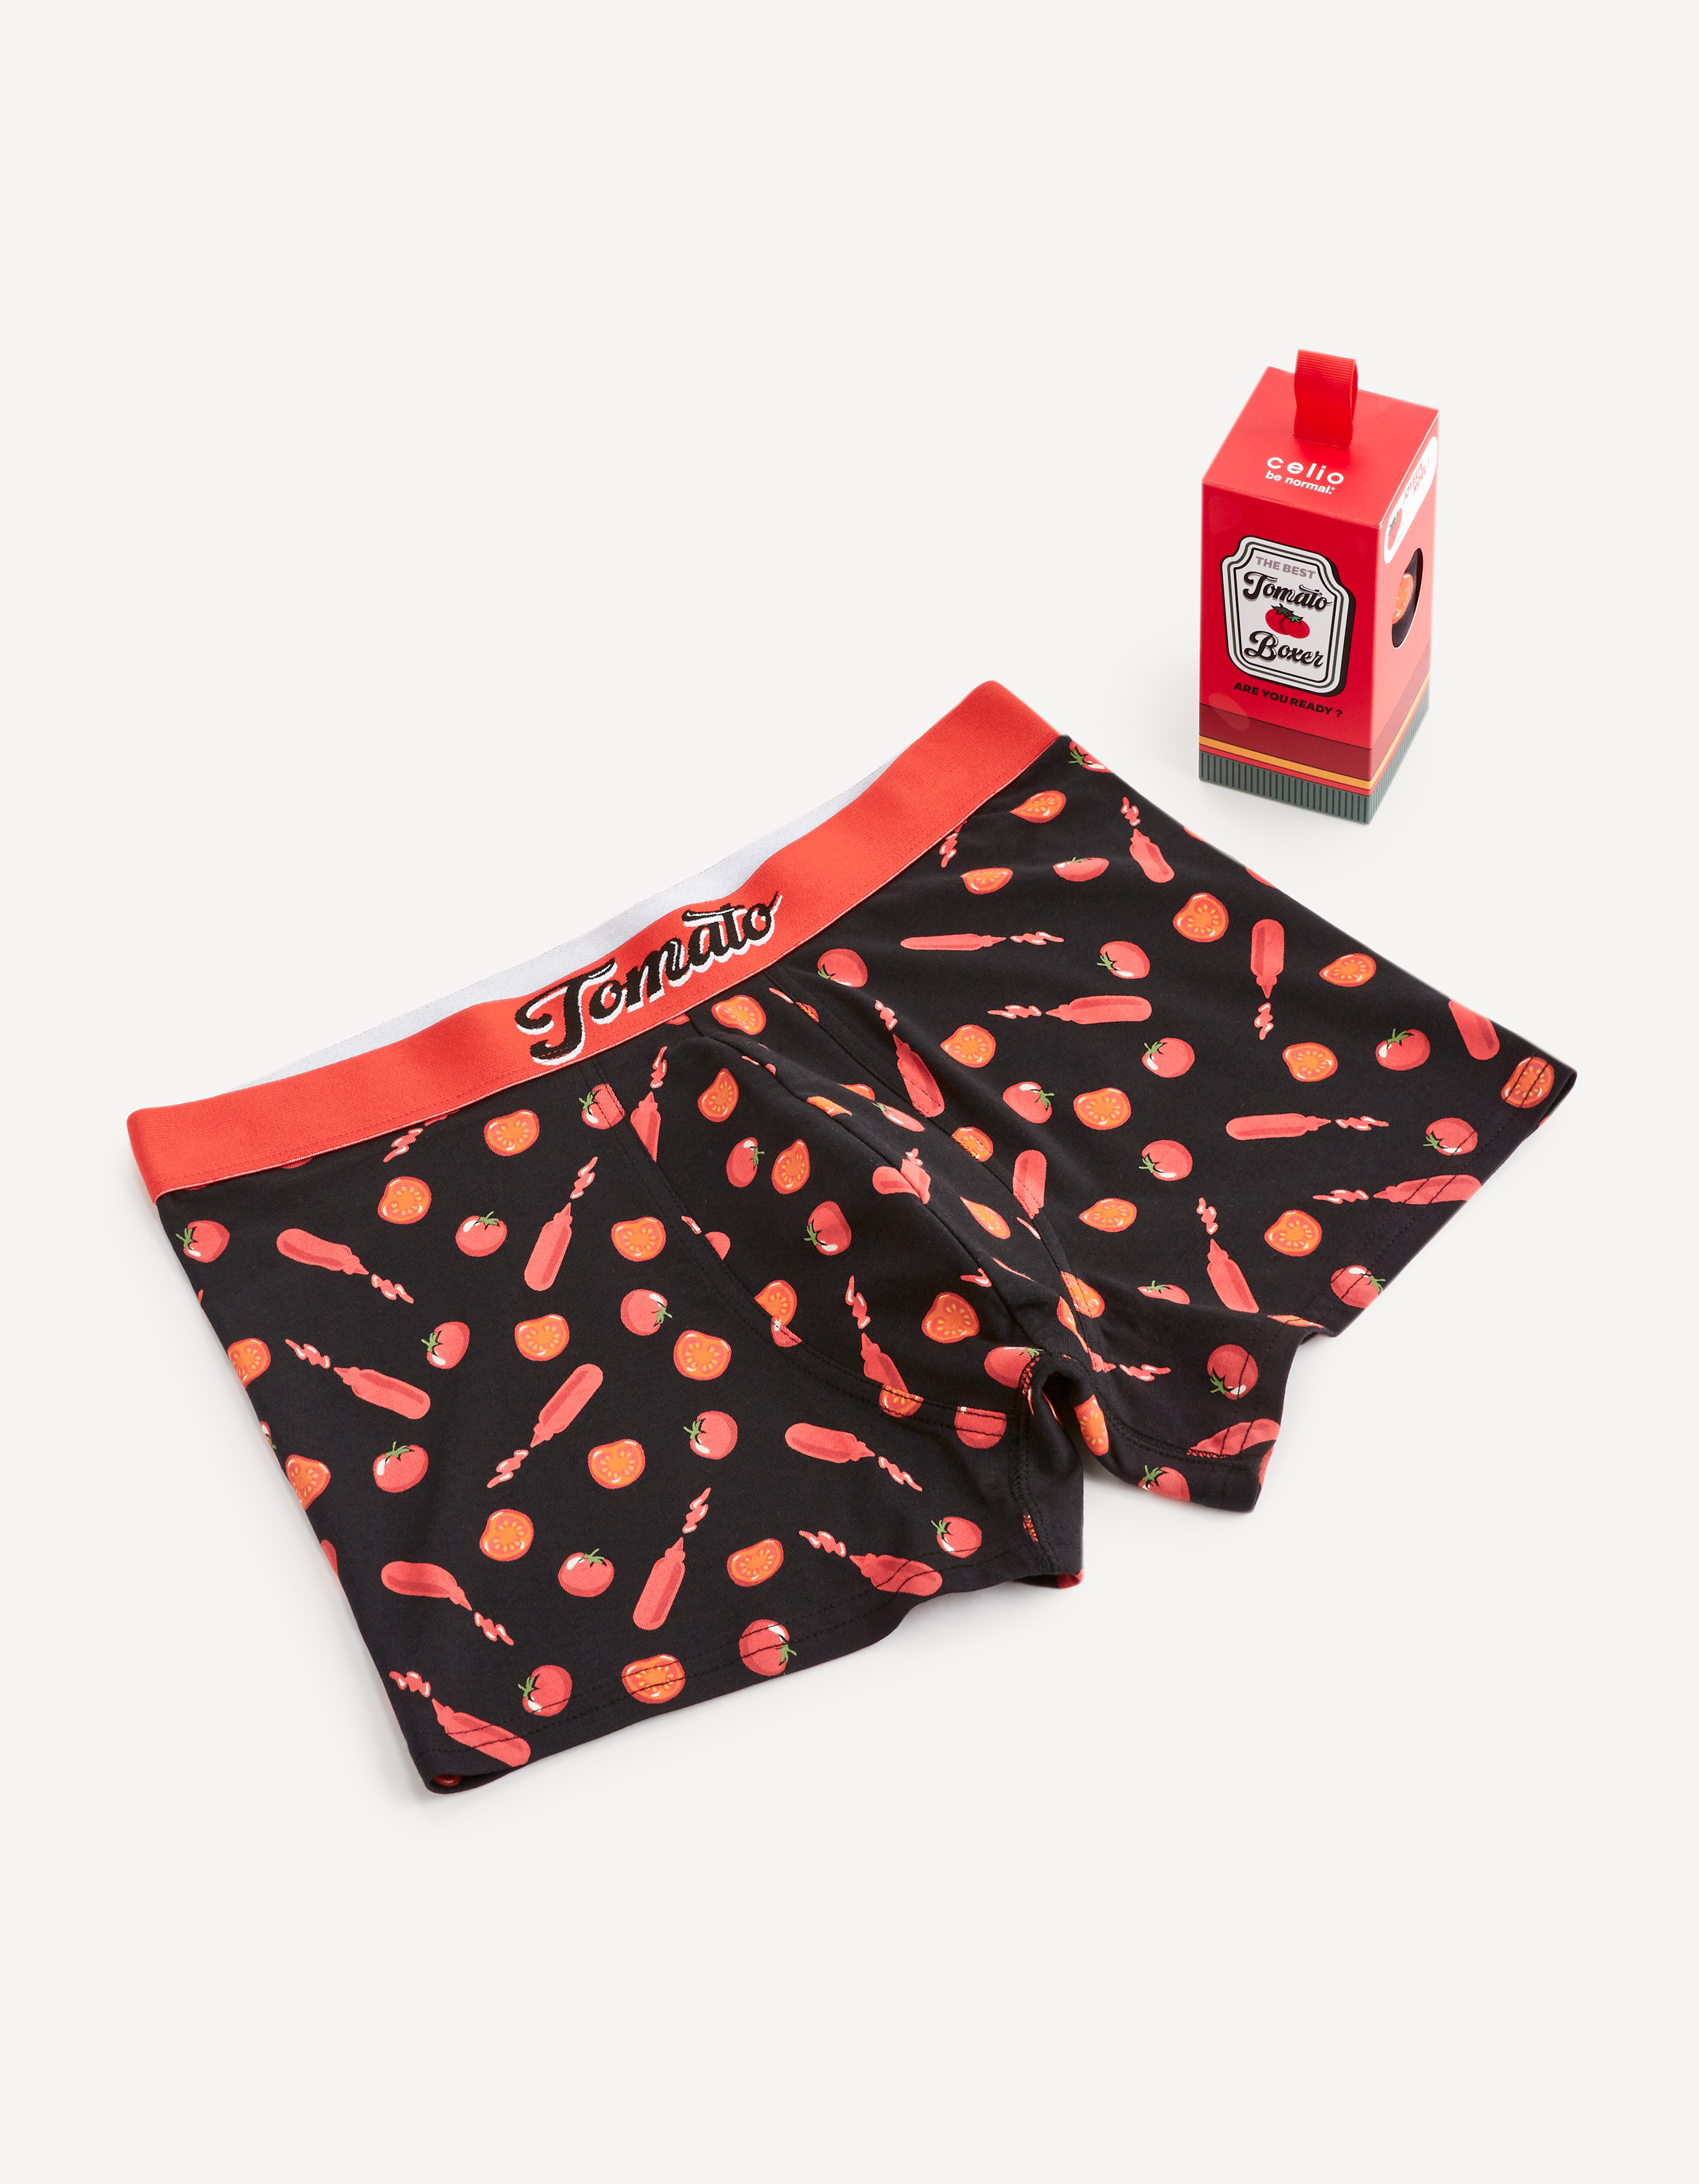 Celio Boxer Shorts In Tomato Gift Box - Men's